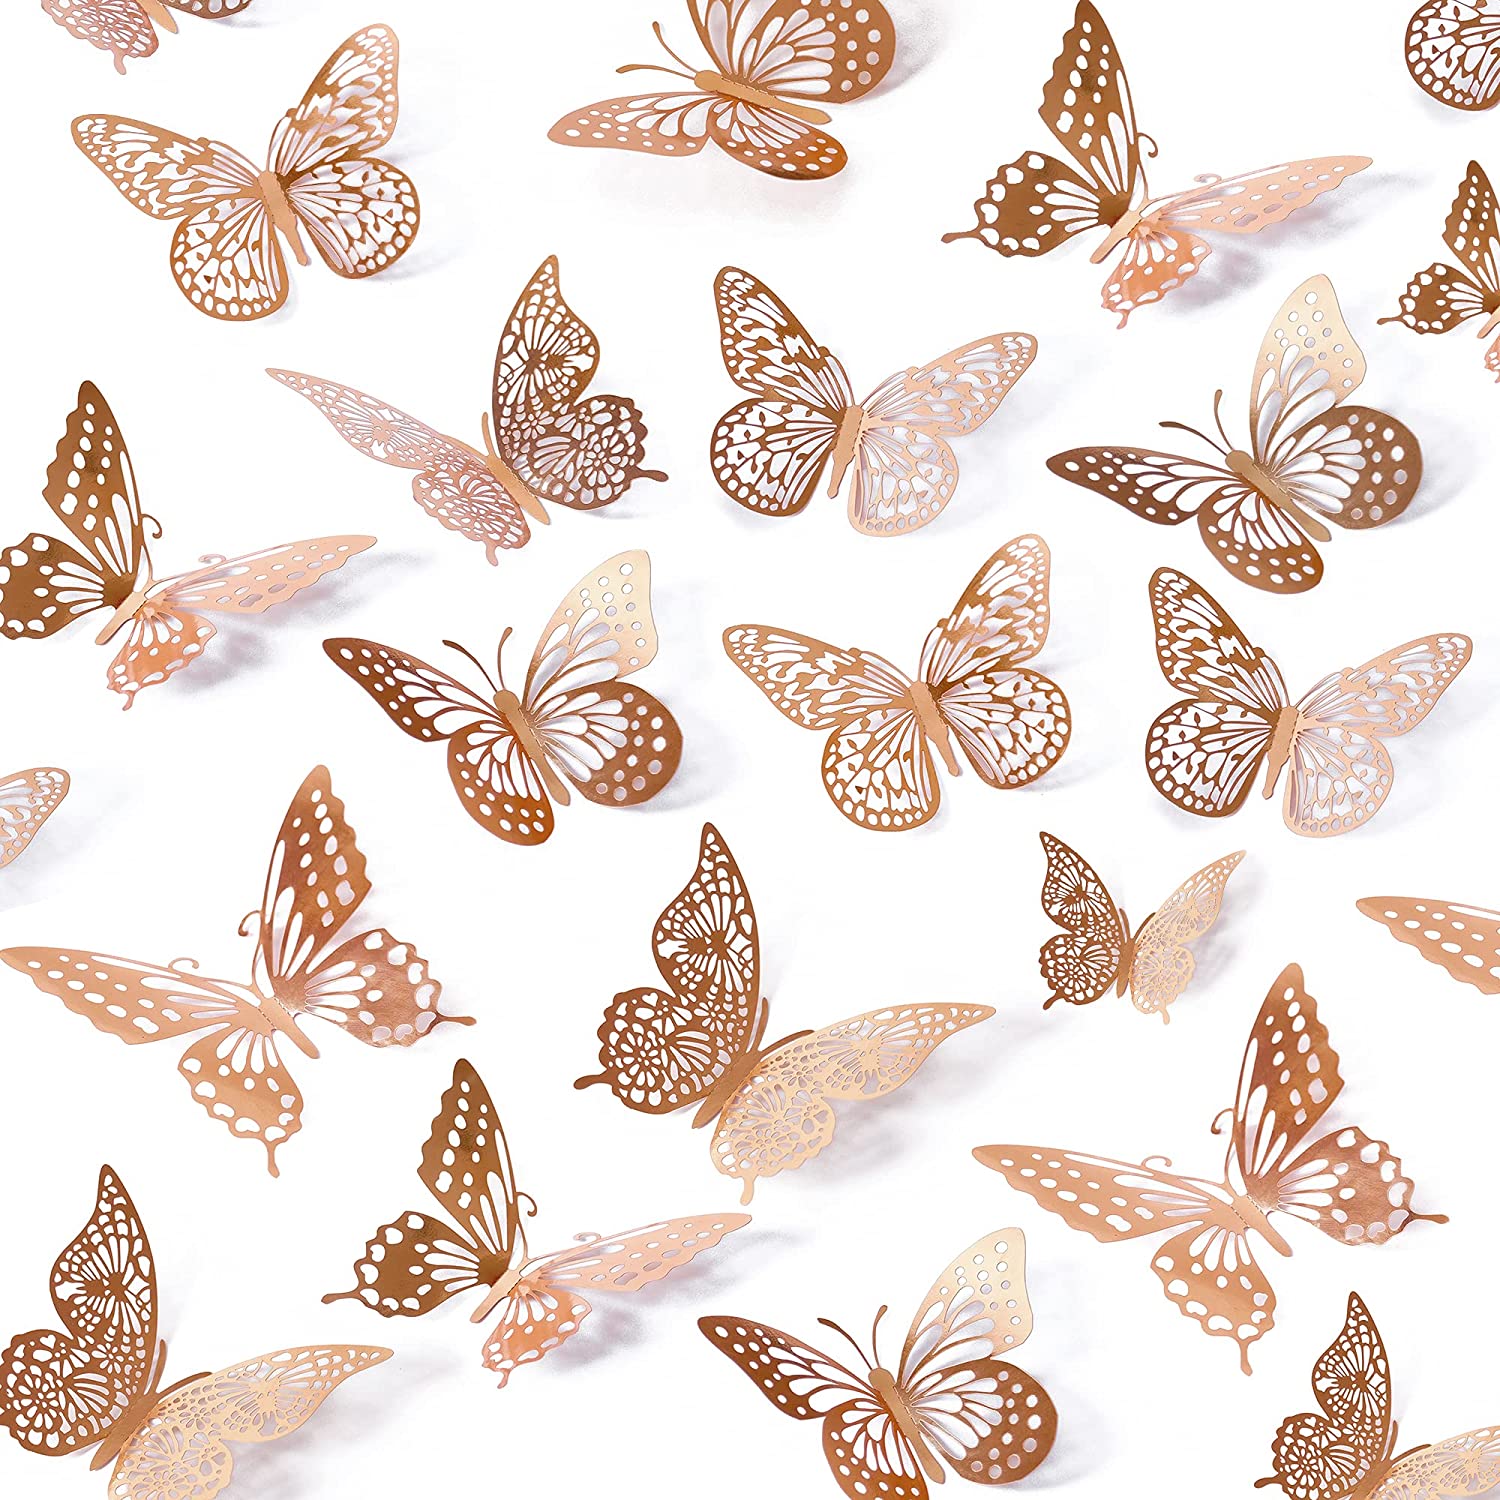 Metallic Butterfly Stickers in 3 Sizes 240